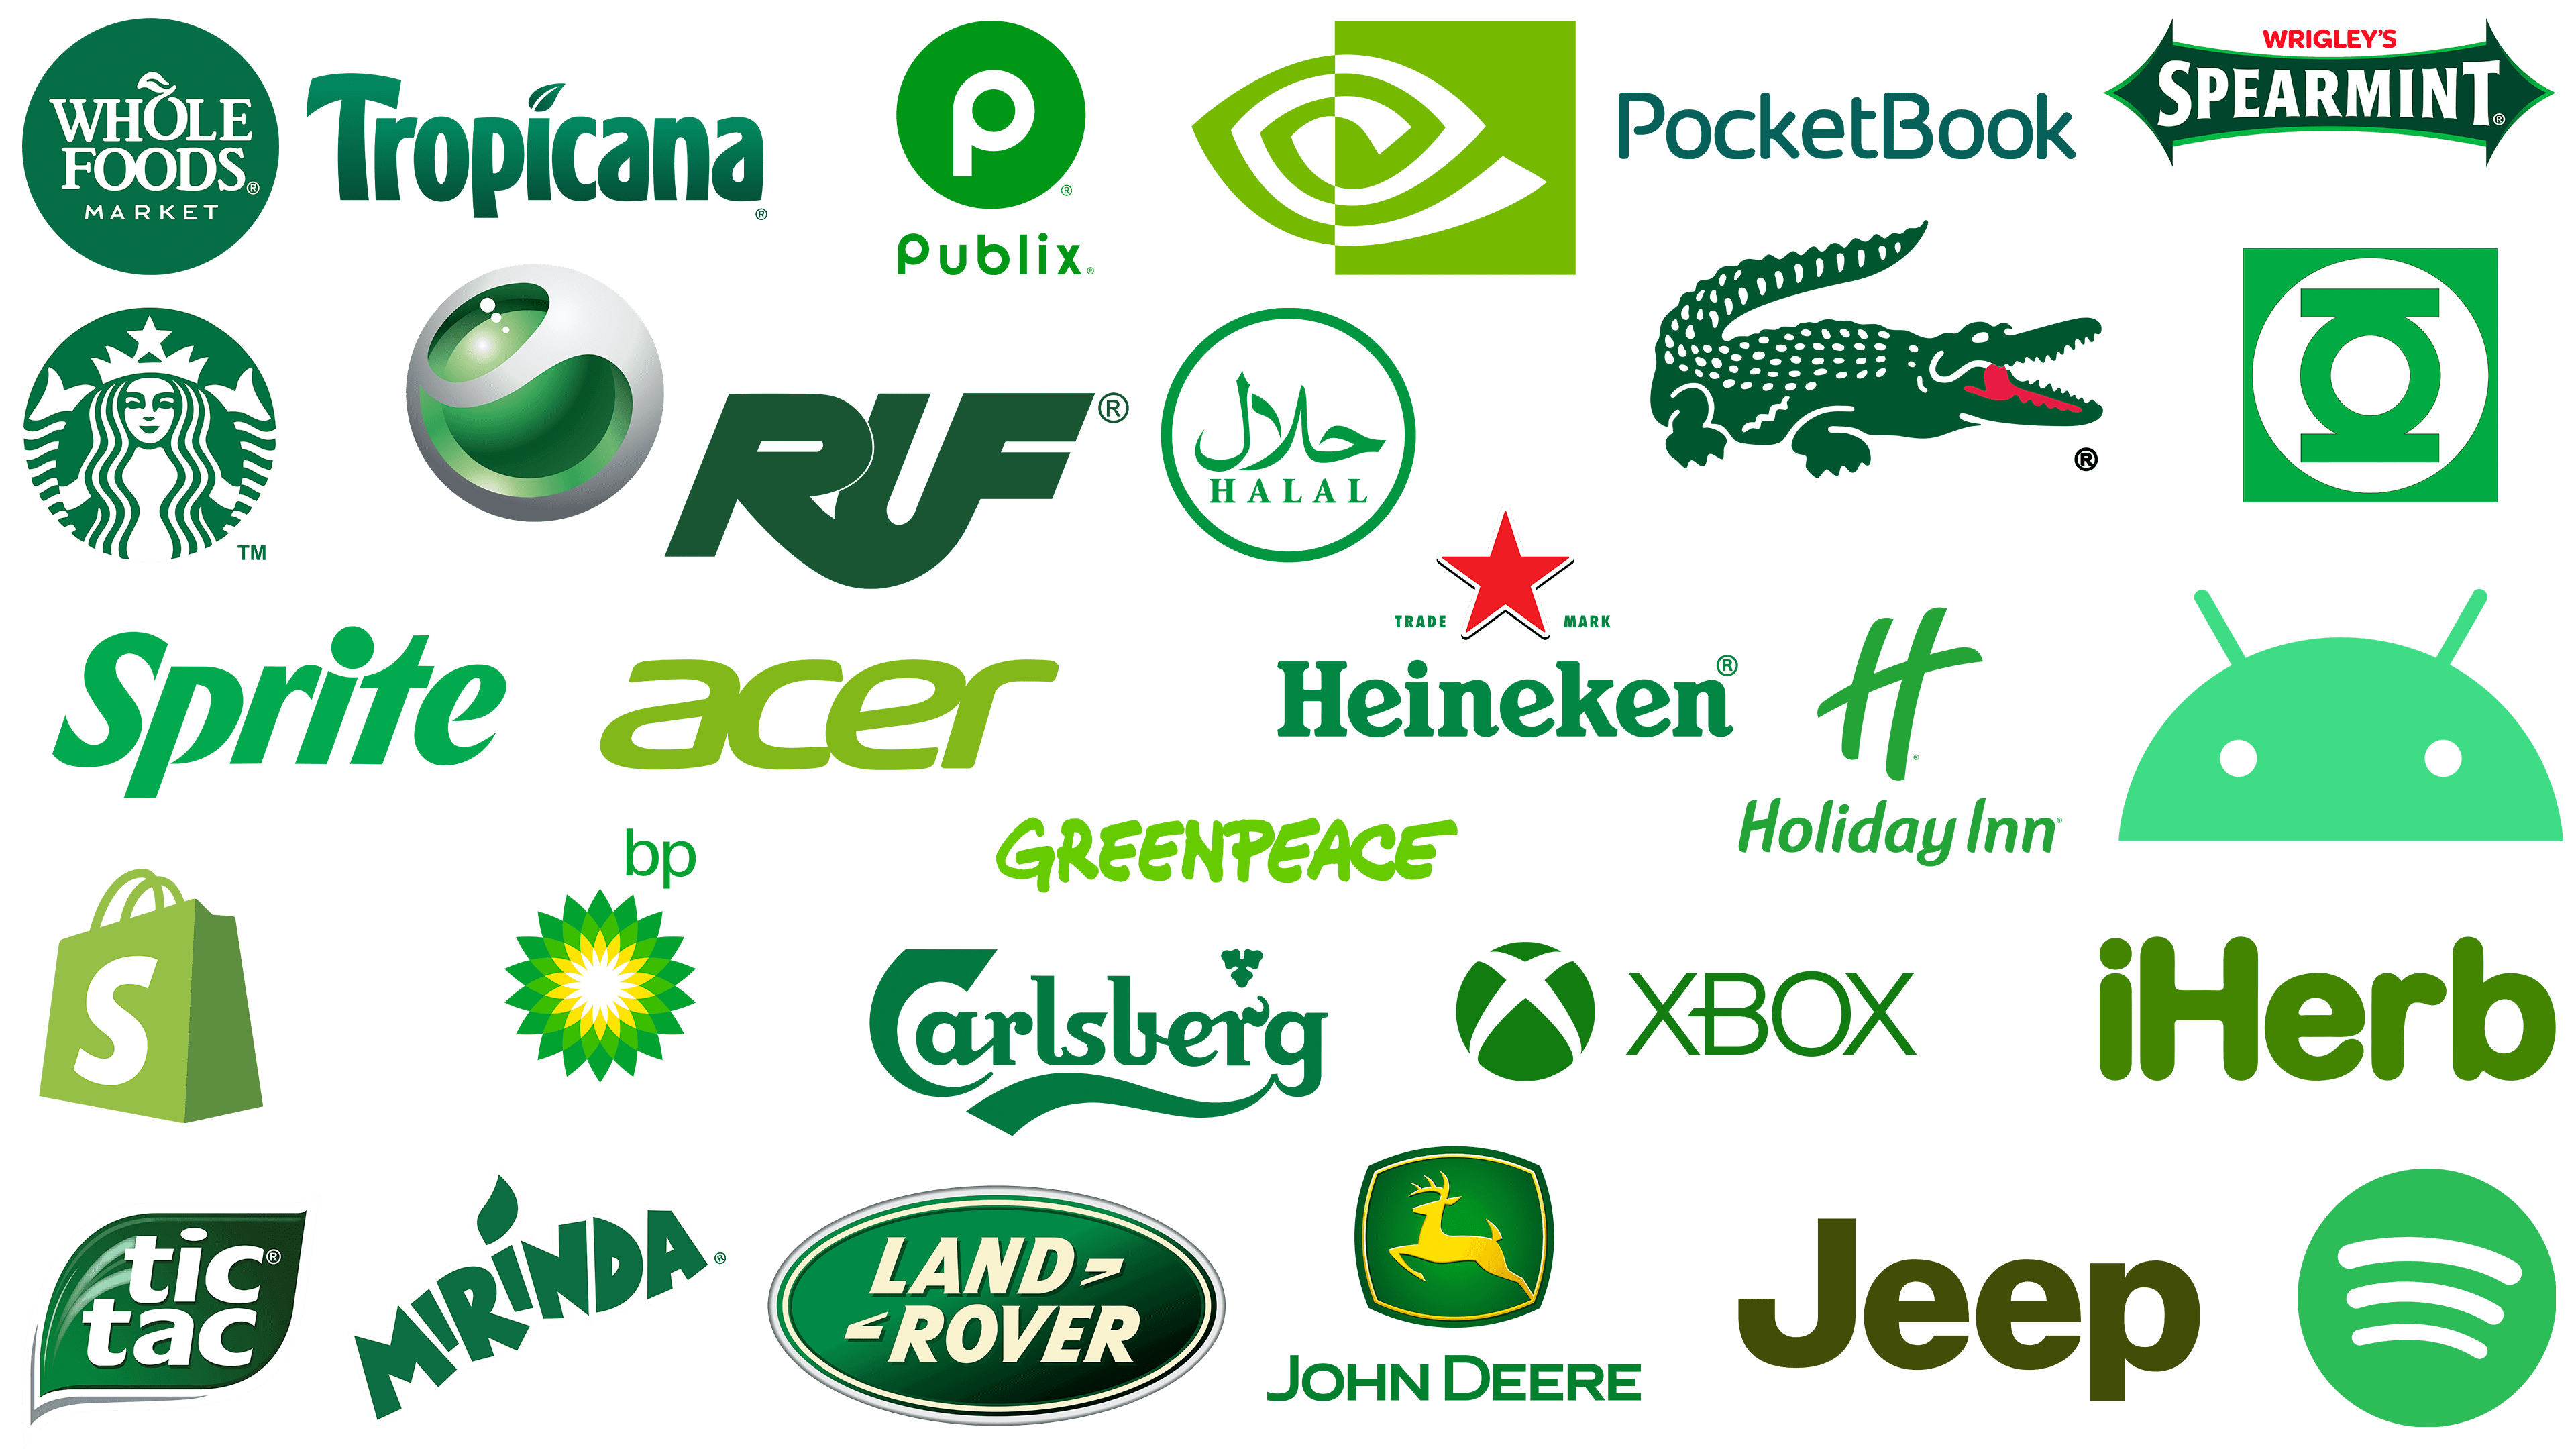 green circle logo with name